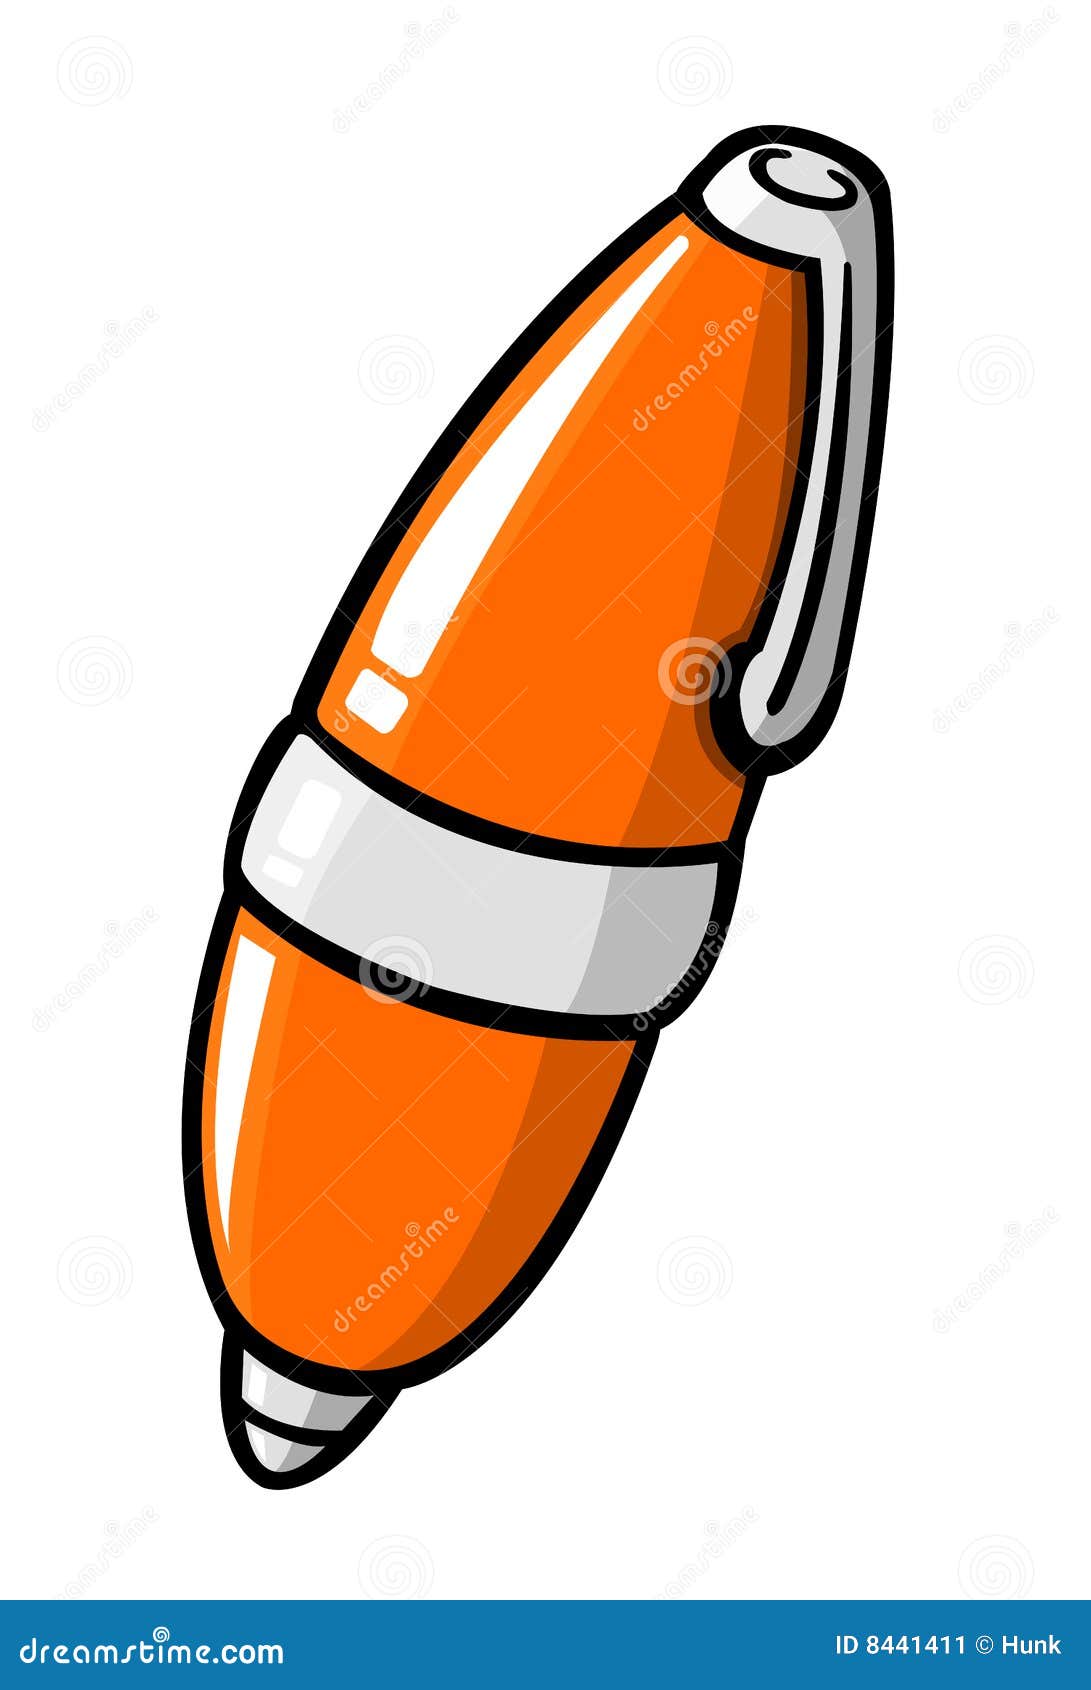 Cartoon pen stock vector. Illustration of pencil, orange - 8441411